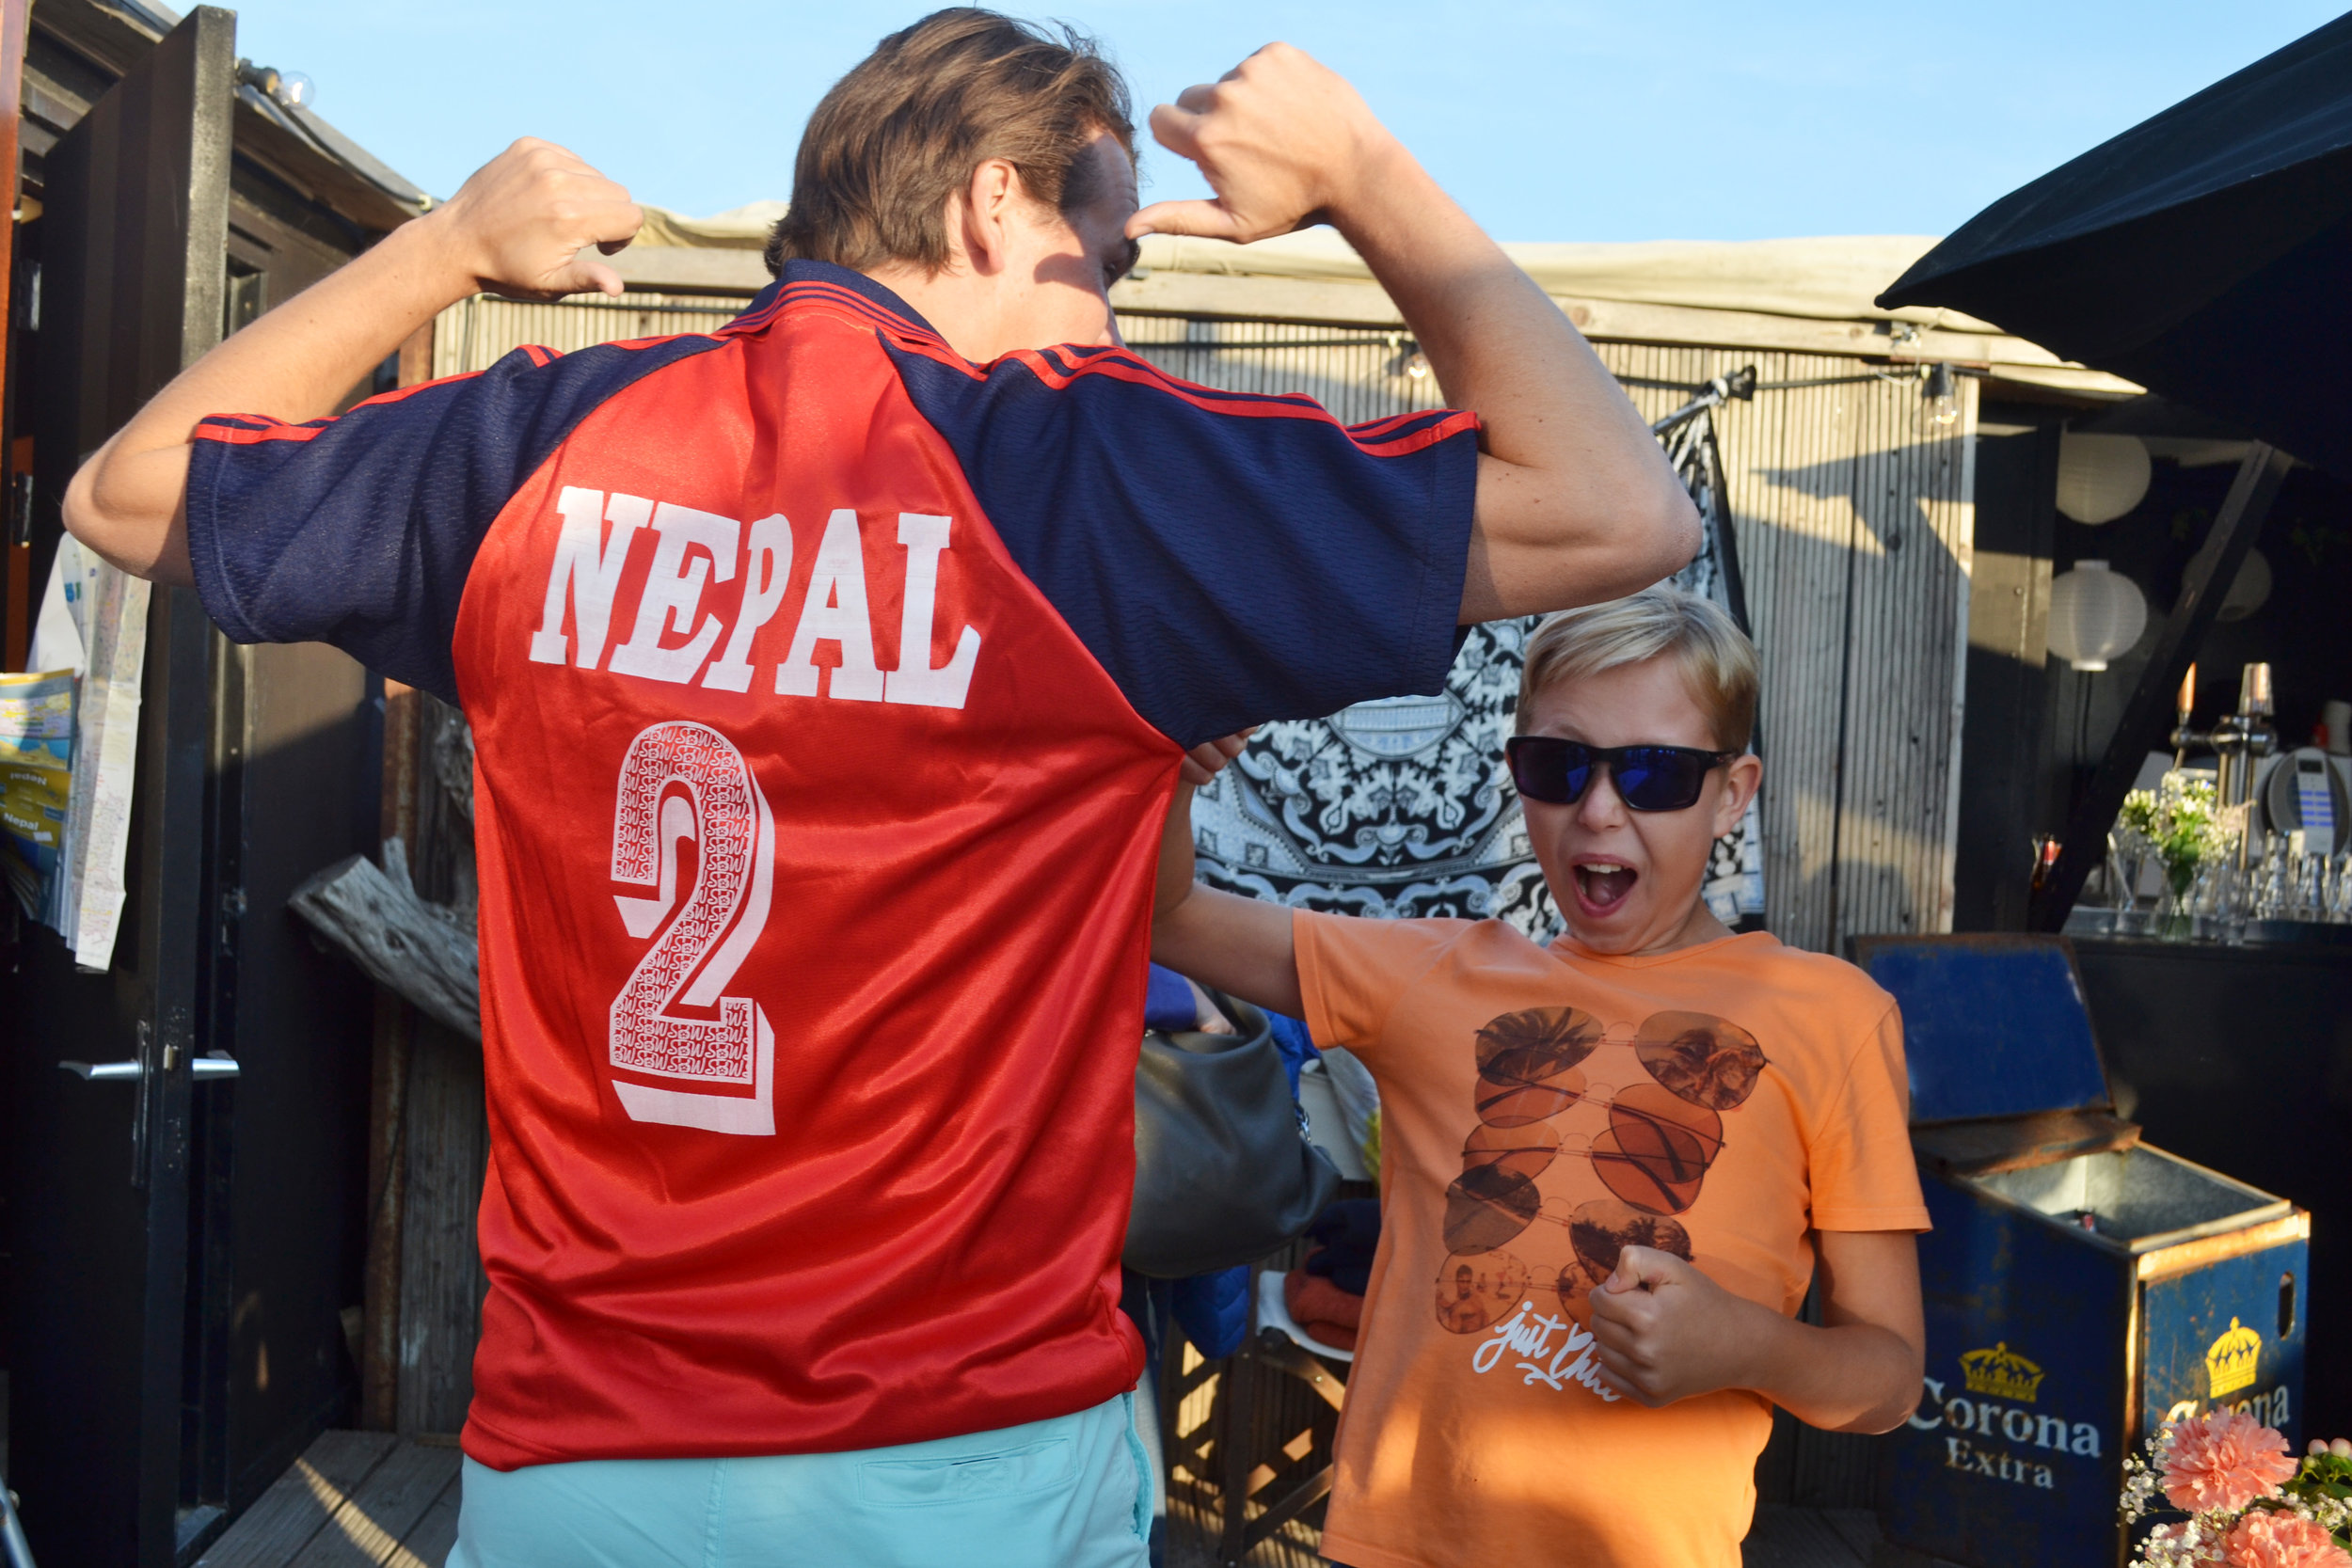 Nepal football t-shirt fetched Euro 100